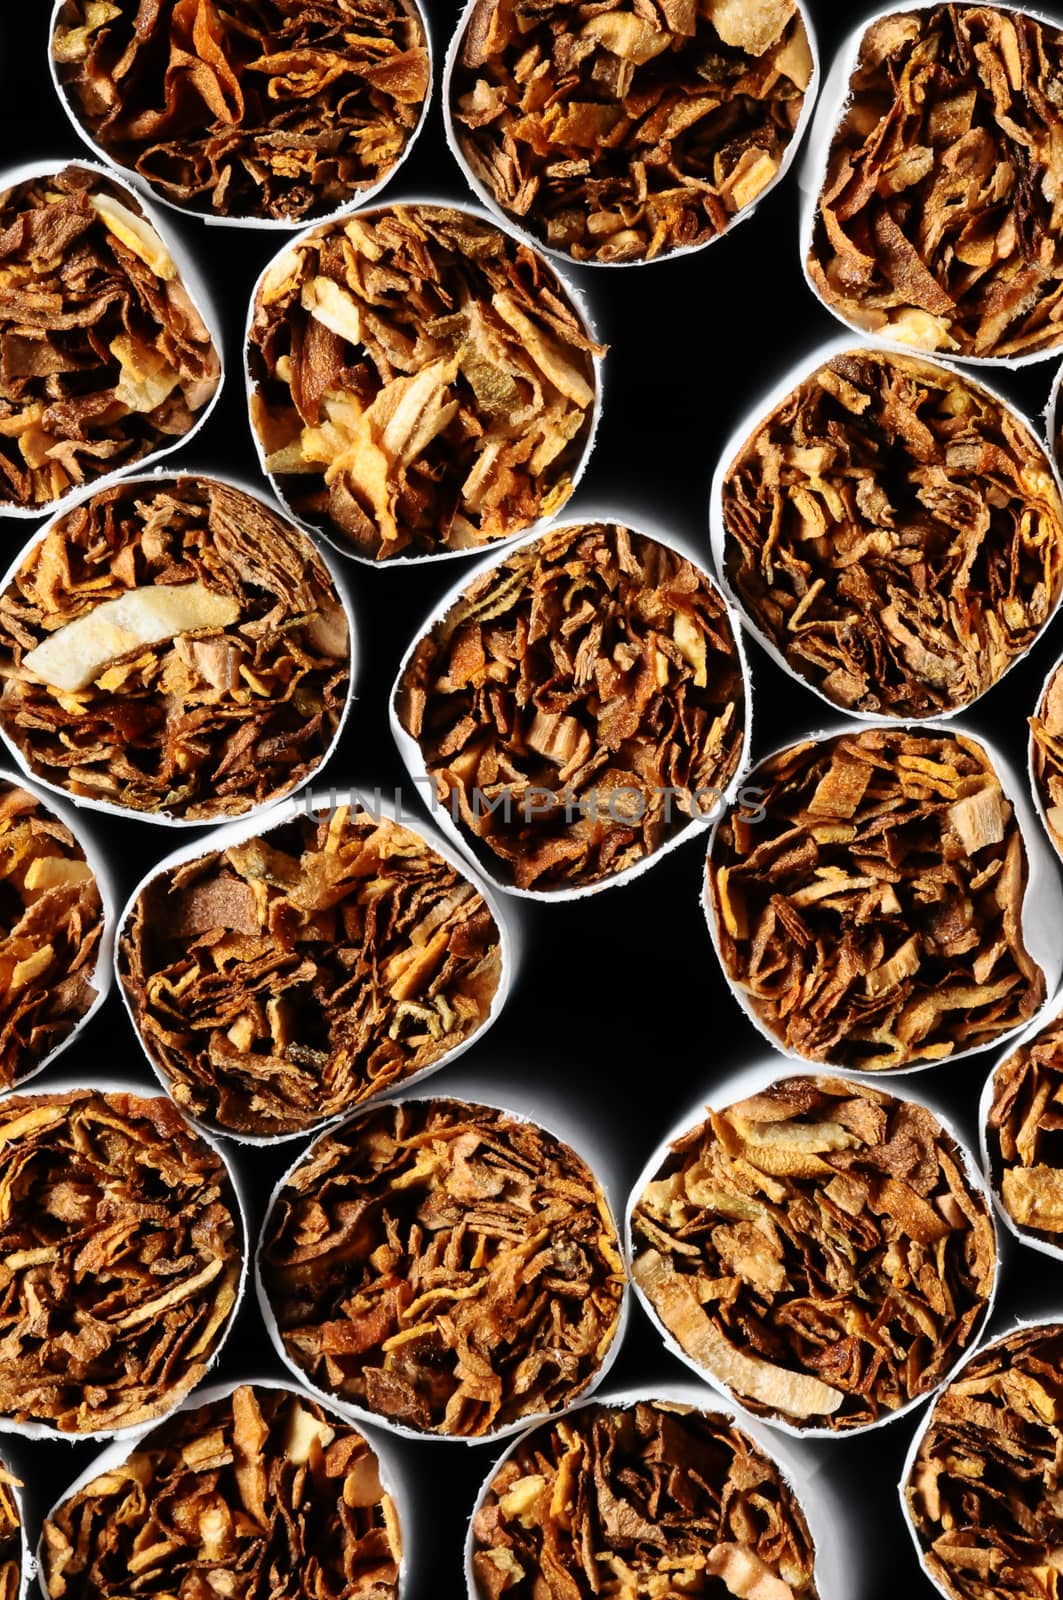 Tobacco Industry by underworld